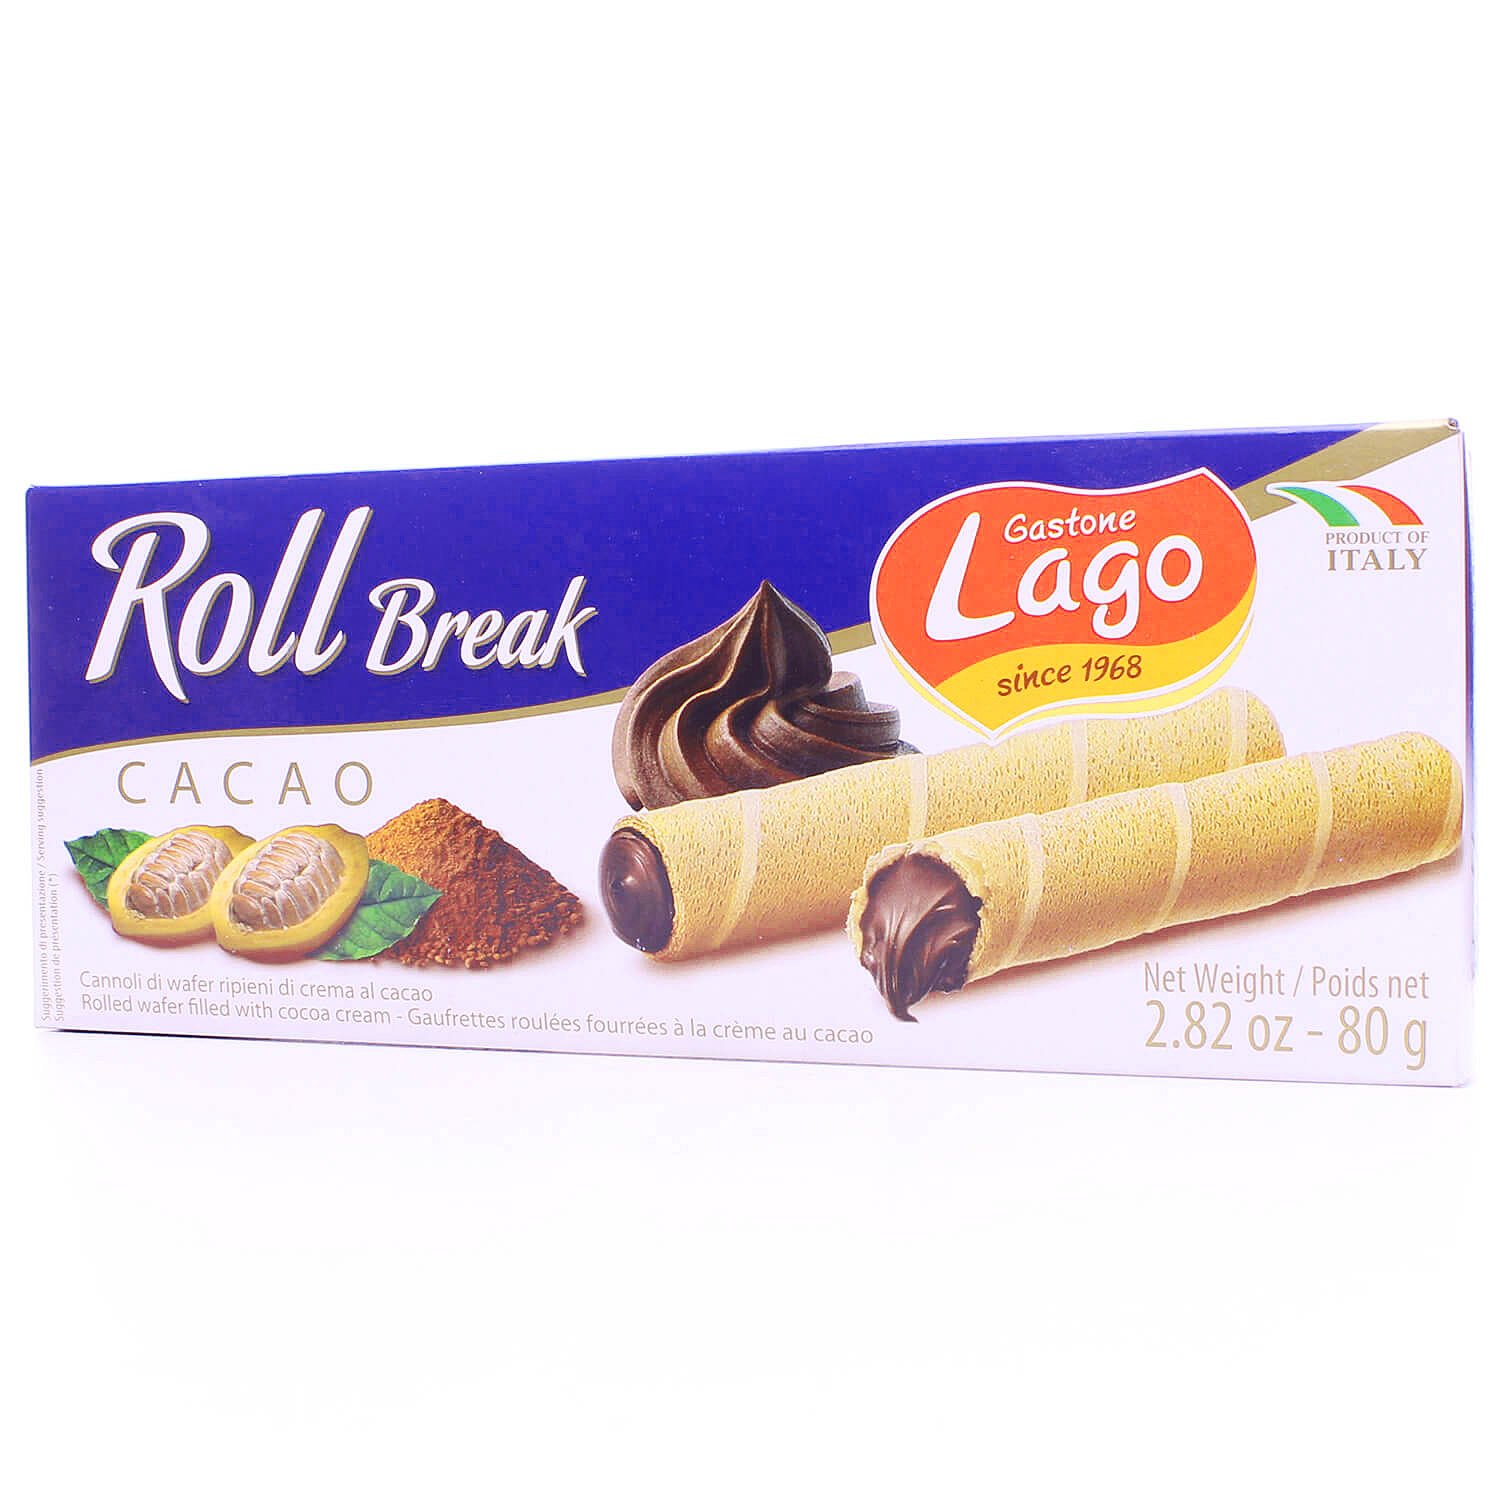 Трубочки вафельные Gastone Lago Roll Break с какао 80 г (747998) - фото 1